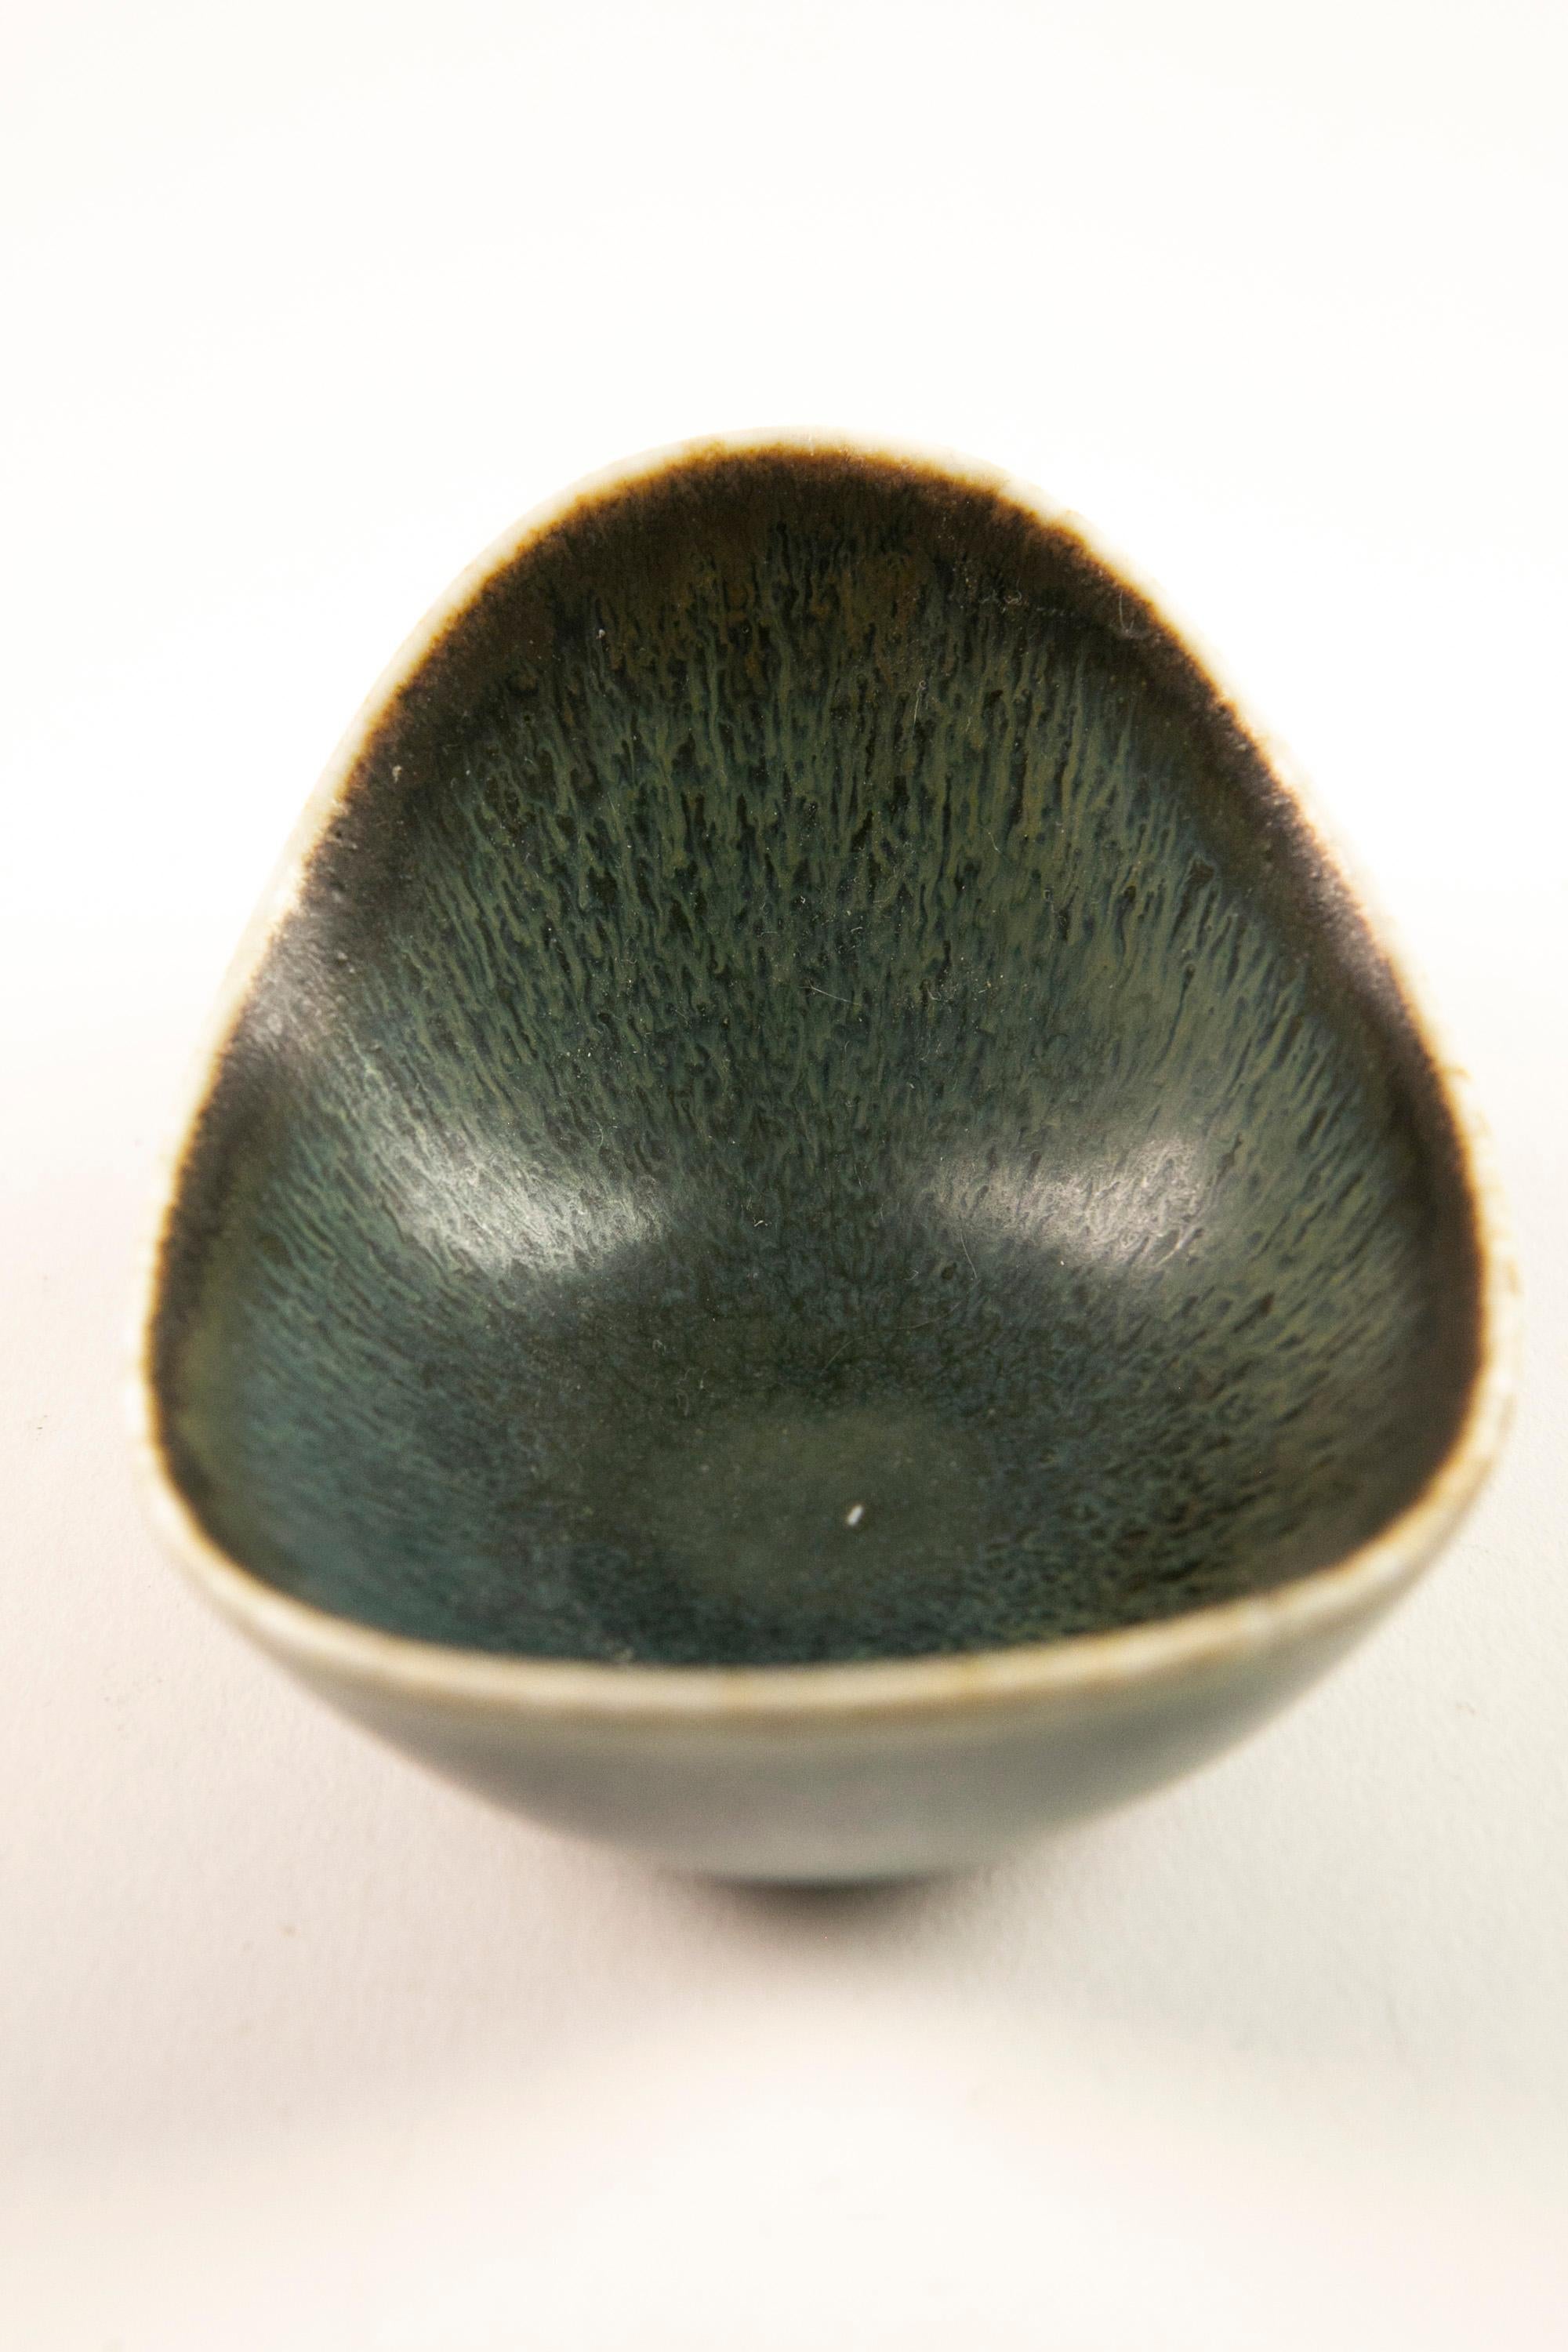 Gunnar Nylund ARO Stoneware Bowl Blue and  Green Glaze Rorstrand Sweden 1960s For Sale 11